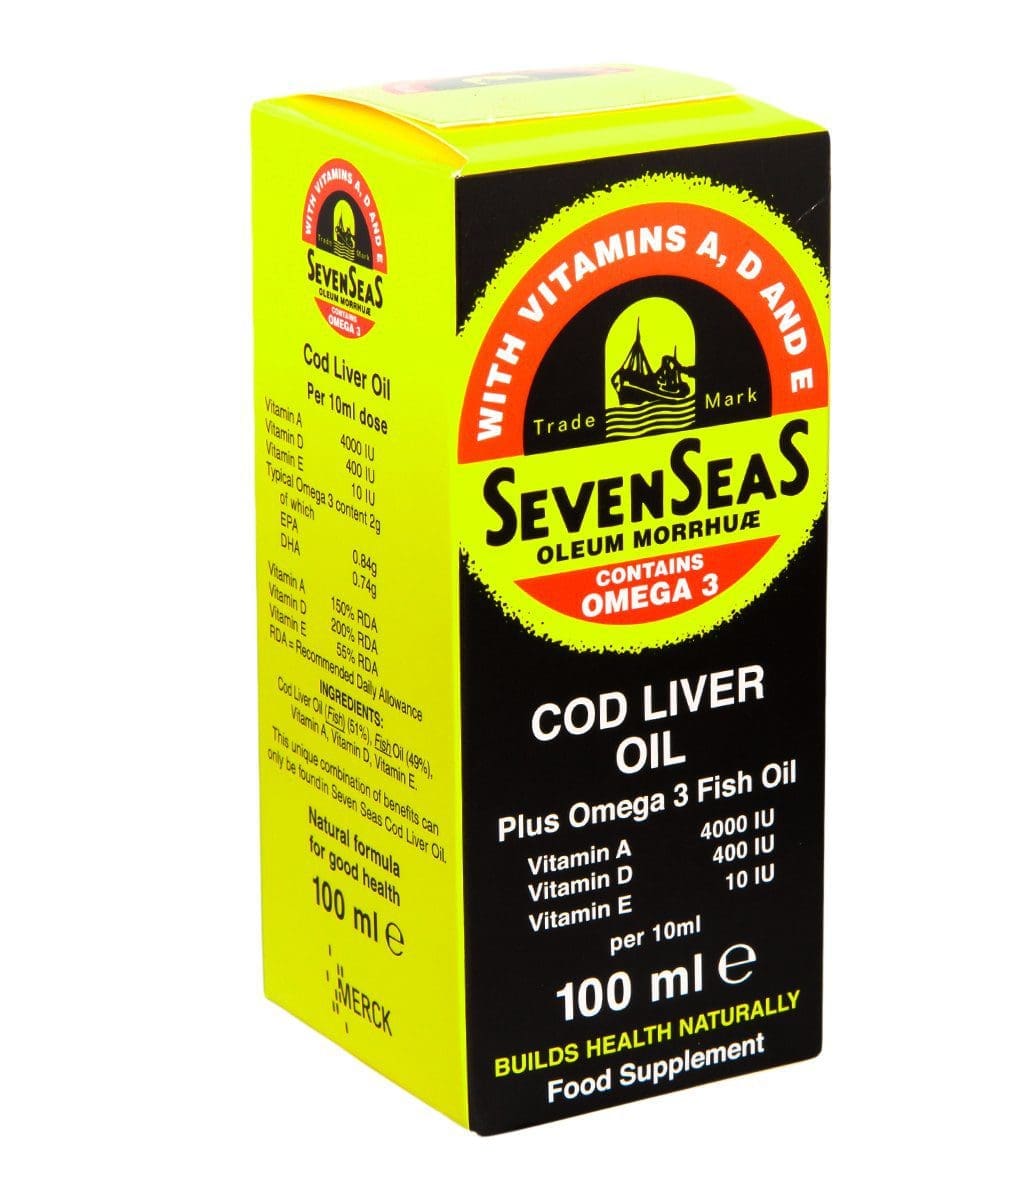 Cod liver oil benefits